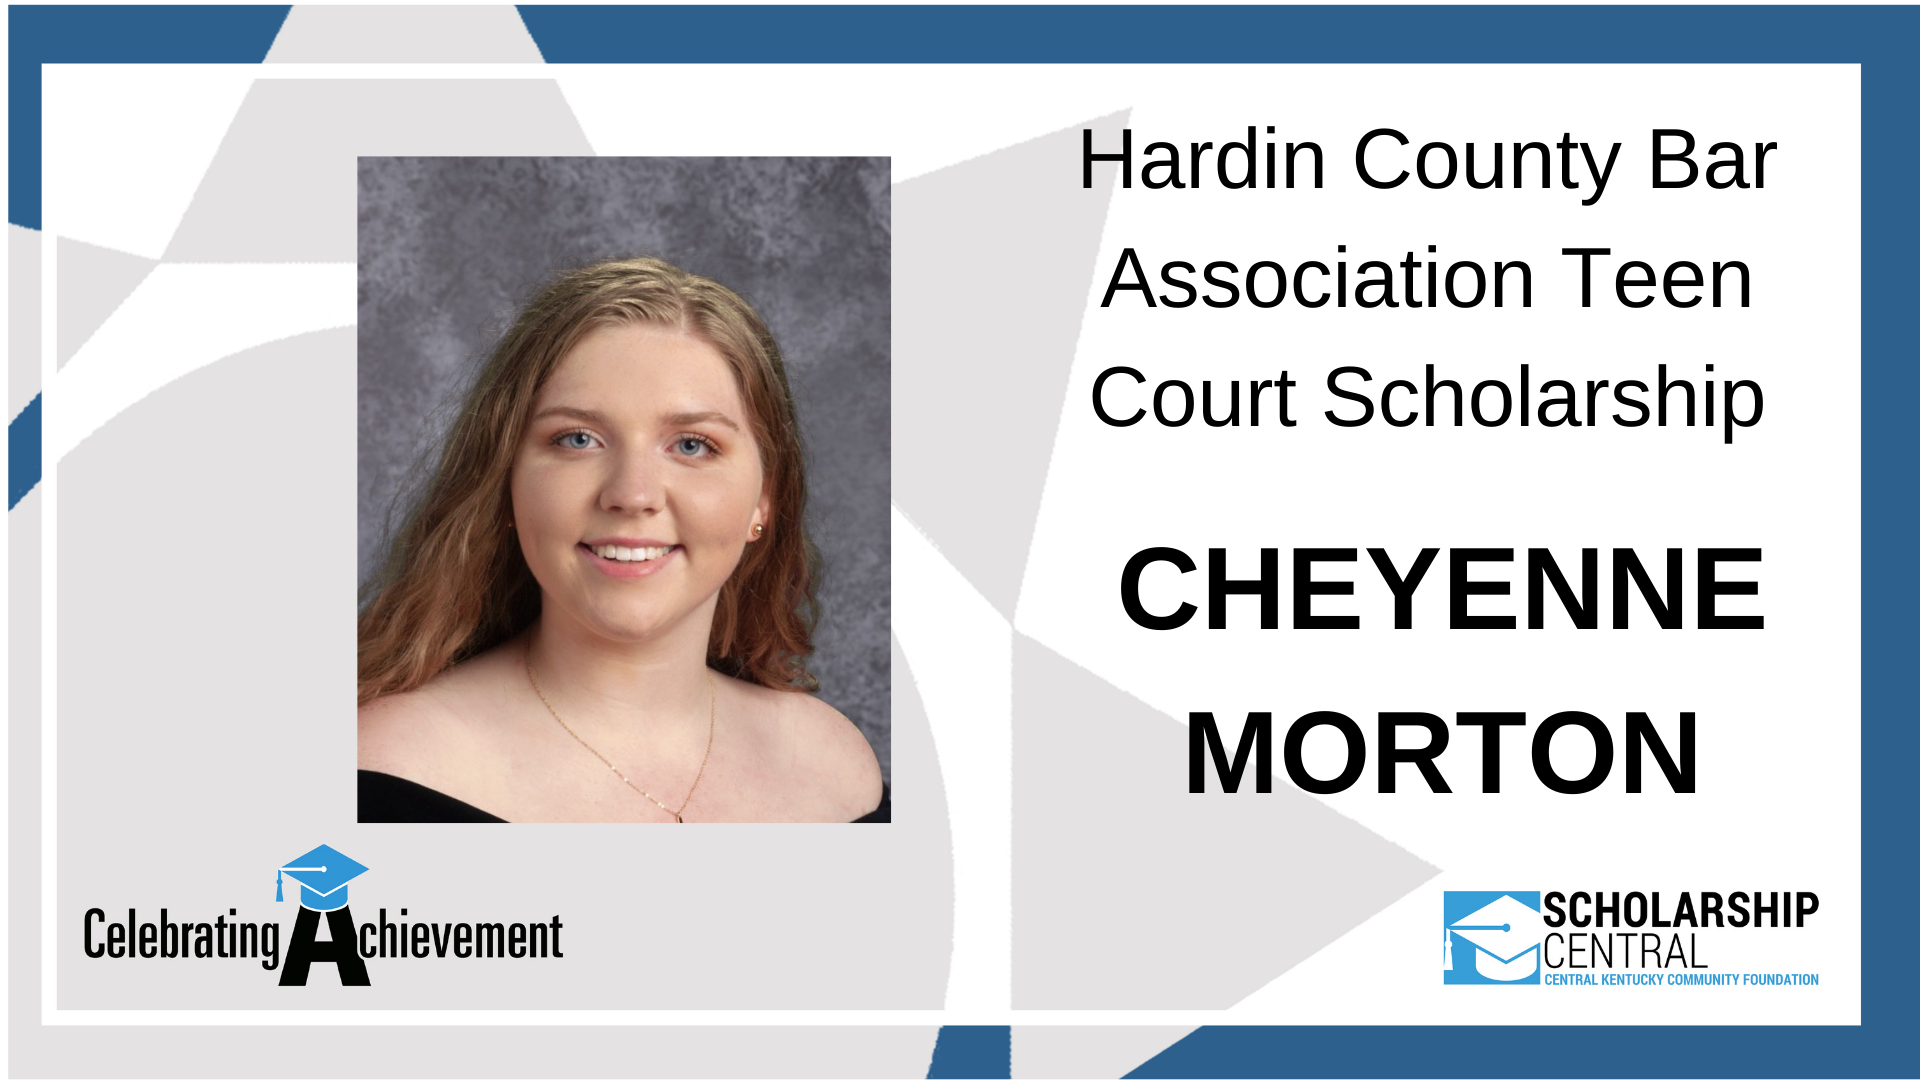 Hardin County Bar Association Teen Court Scholarship Winner